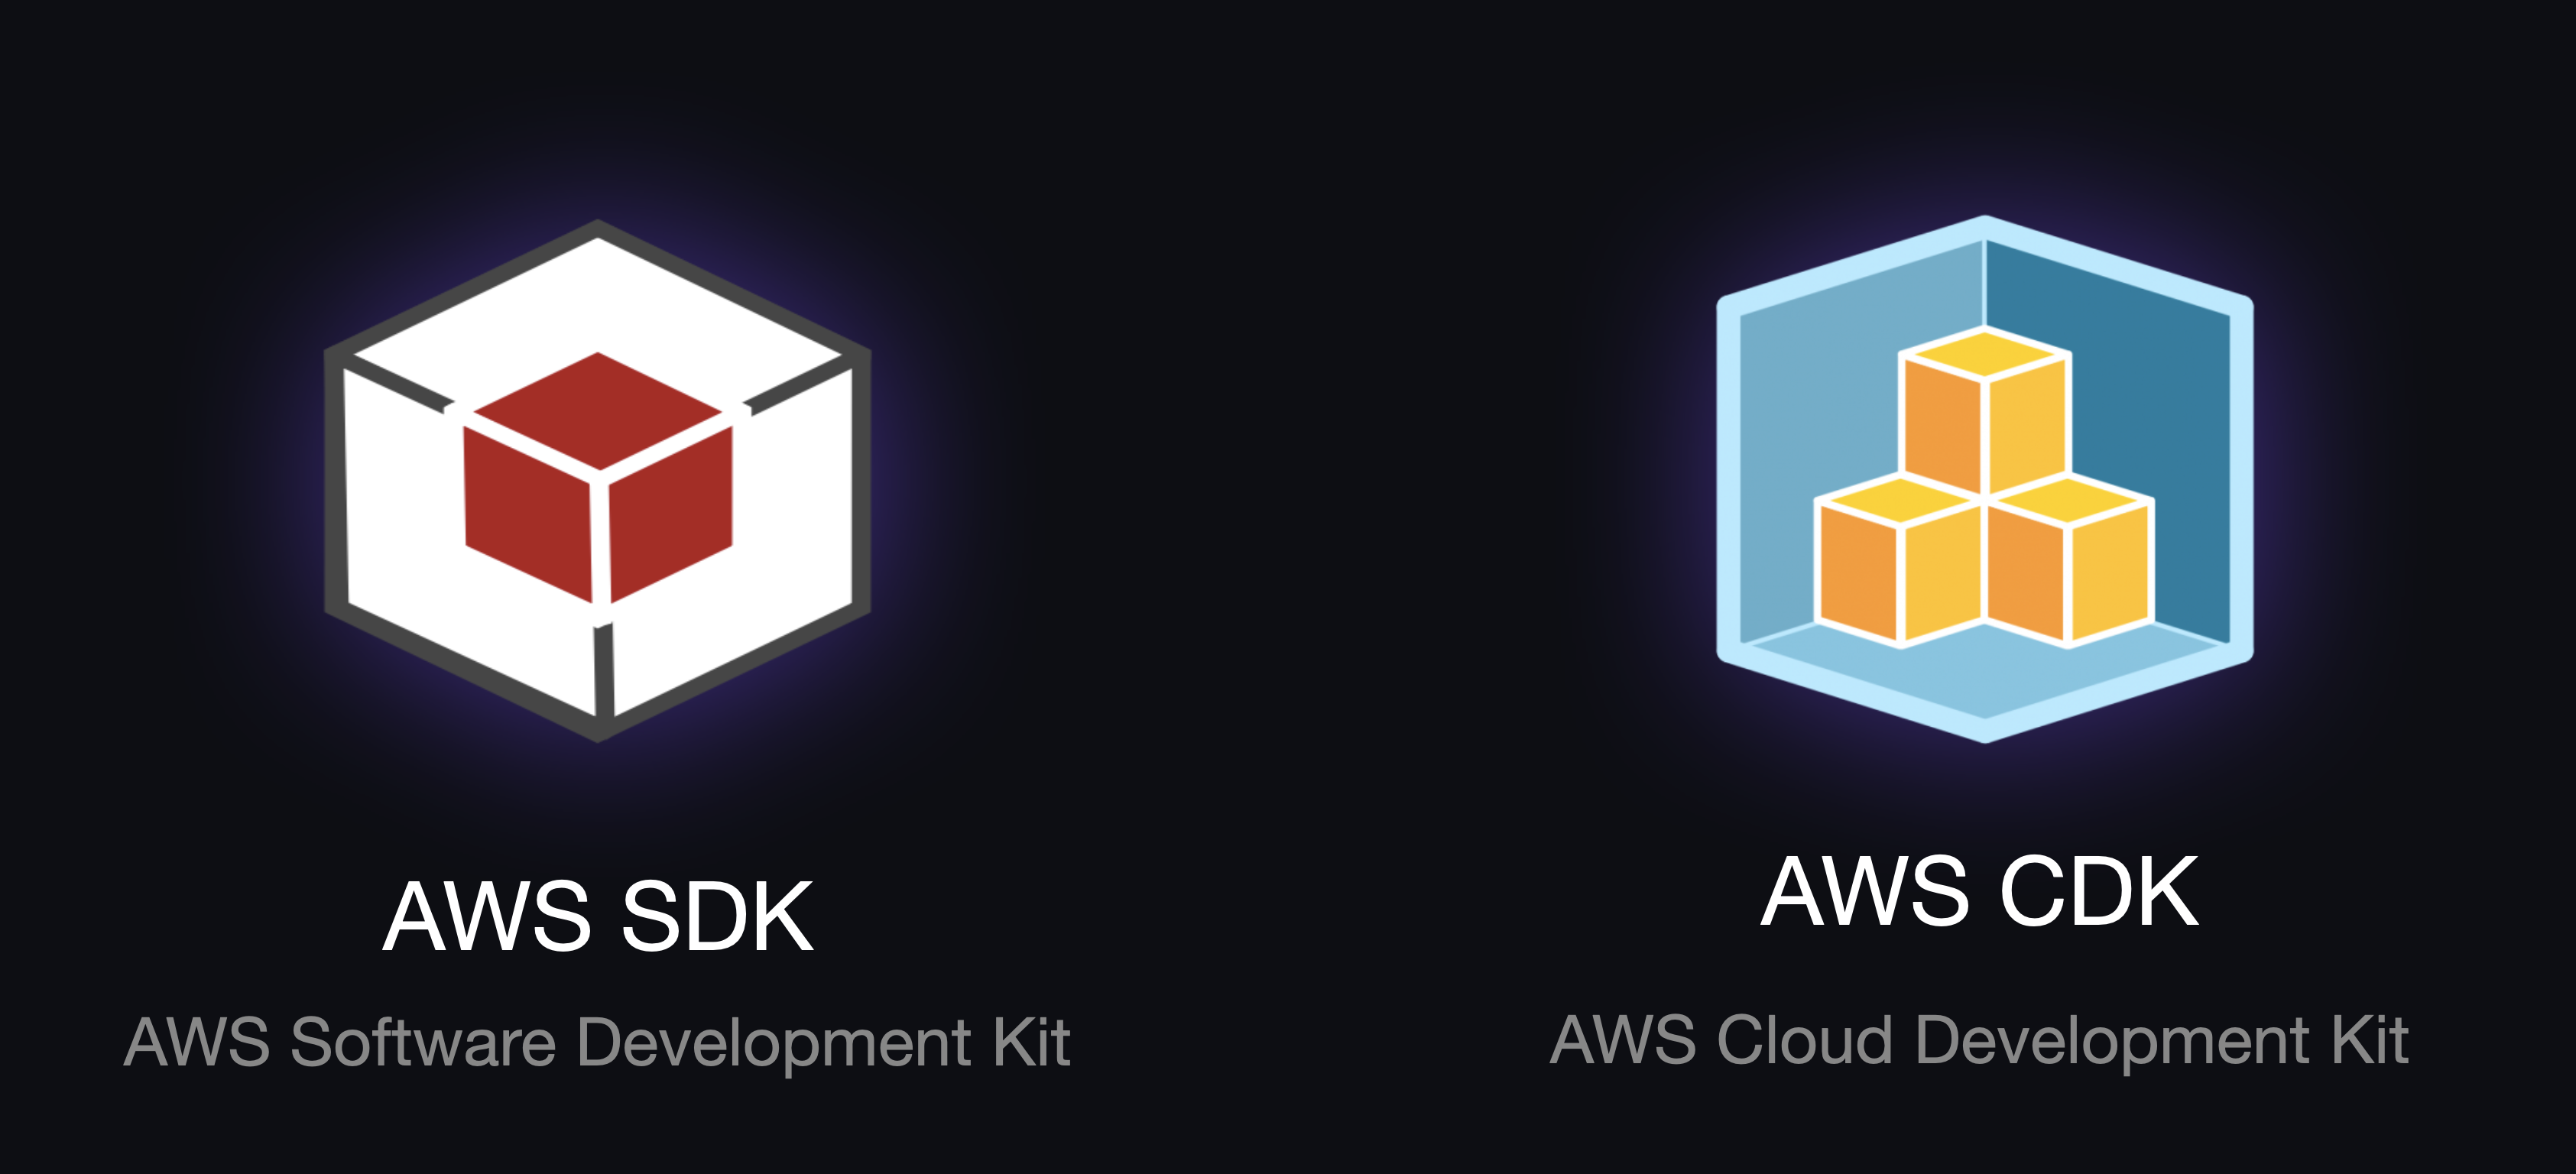 Logos for AWS SDK and AWS CDK.